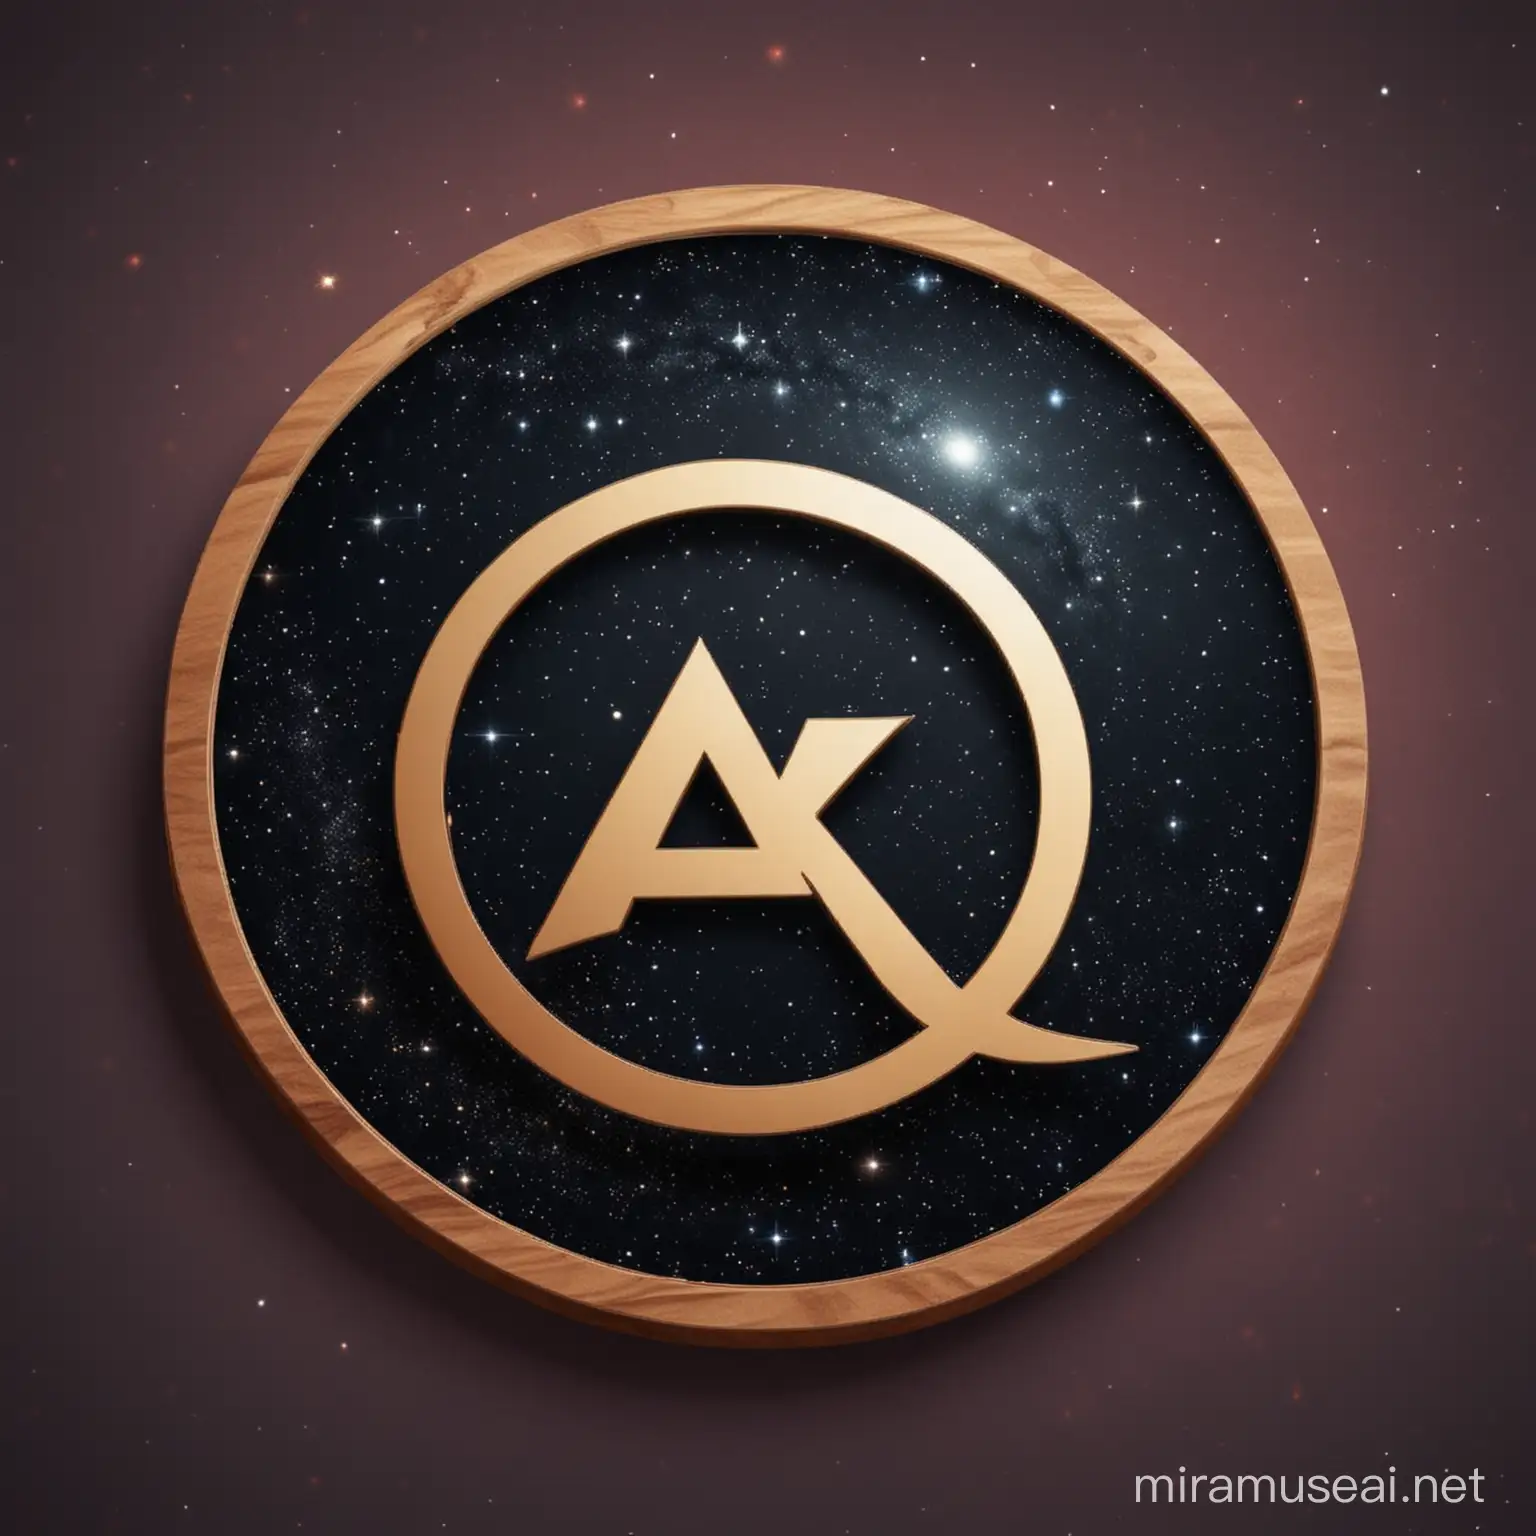 Stellar AK Emblem GalaxyInspired Circular Logo